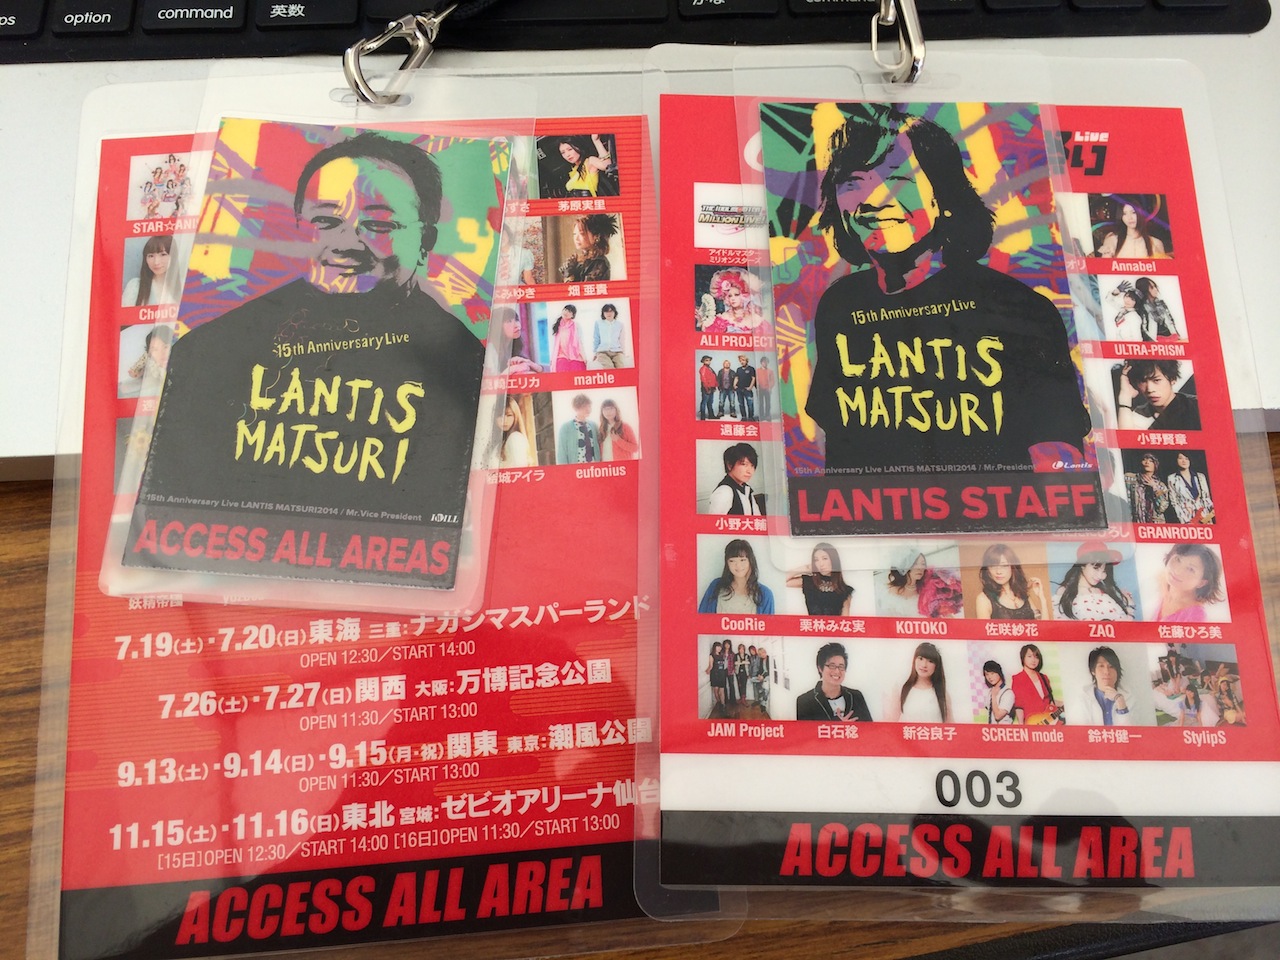 http://www.lantis.jp/15th/staffblog/2014-07-20%2013.19.16.jpg